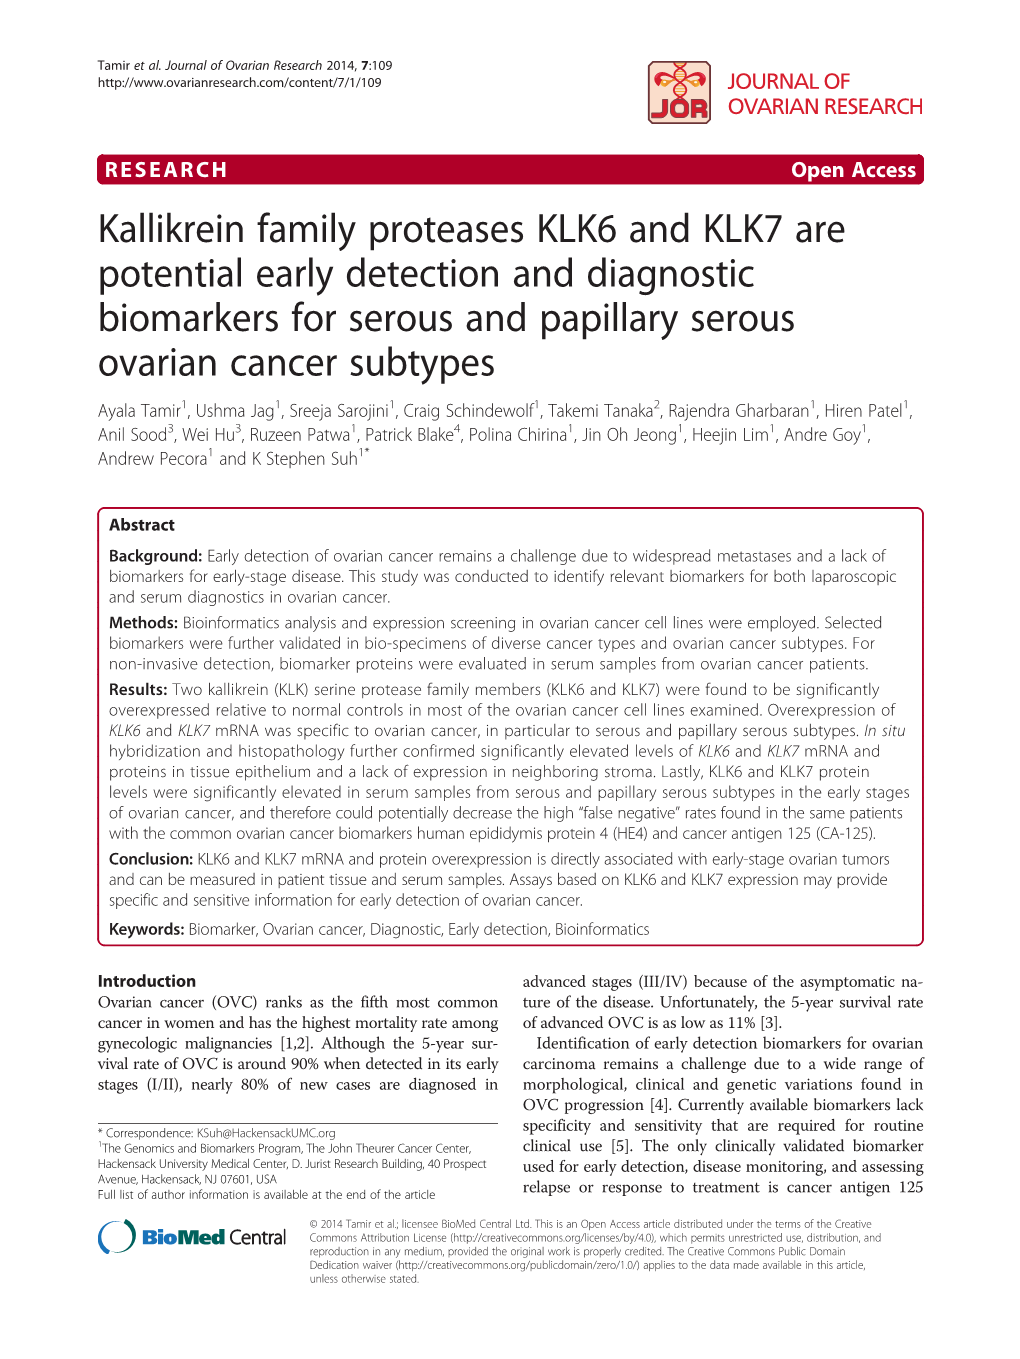 Kallikrein Family Proteases KLK6 and KLK7 Are Potential Early Detection